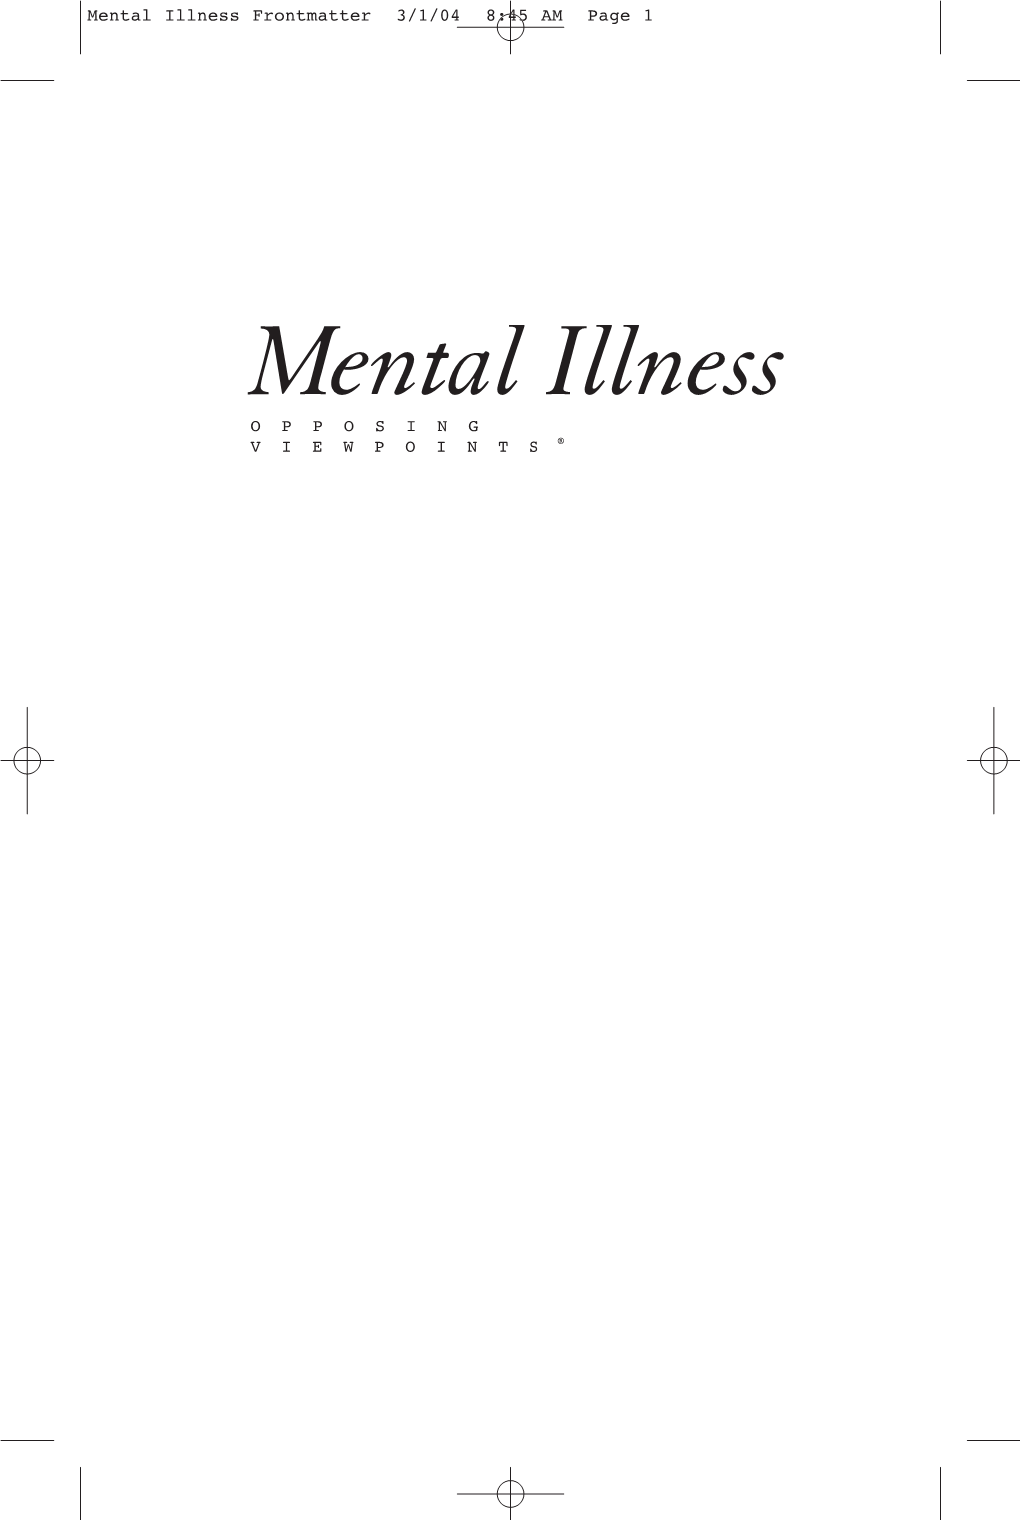 Mental Illness Frontmatter 3/1/04 8:45 AM Page 1